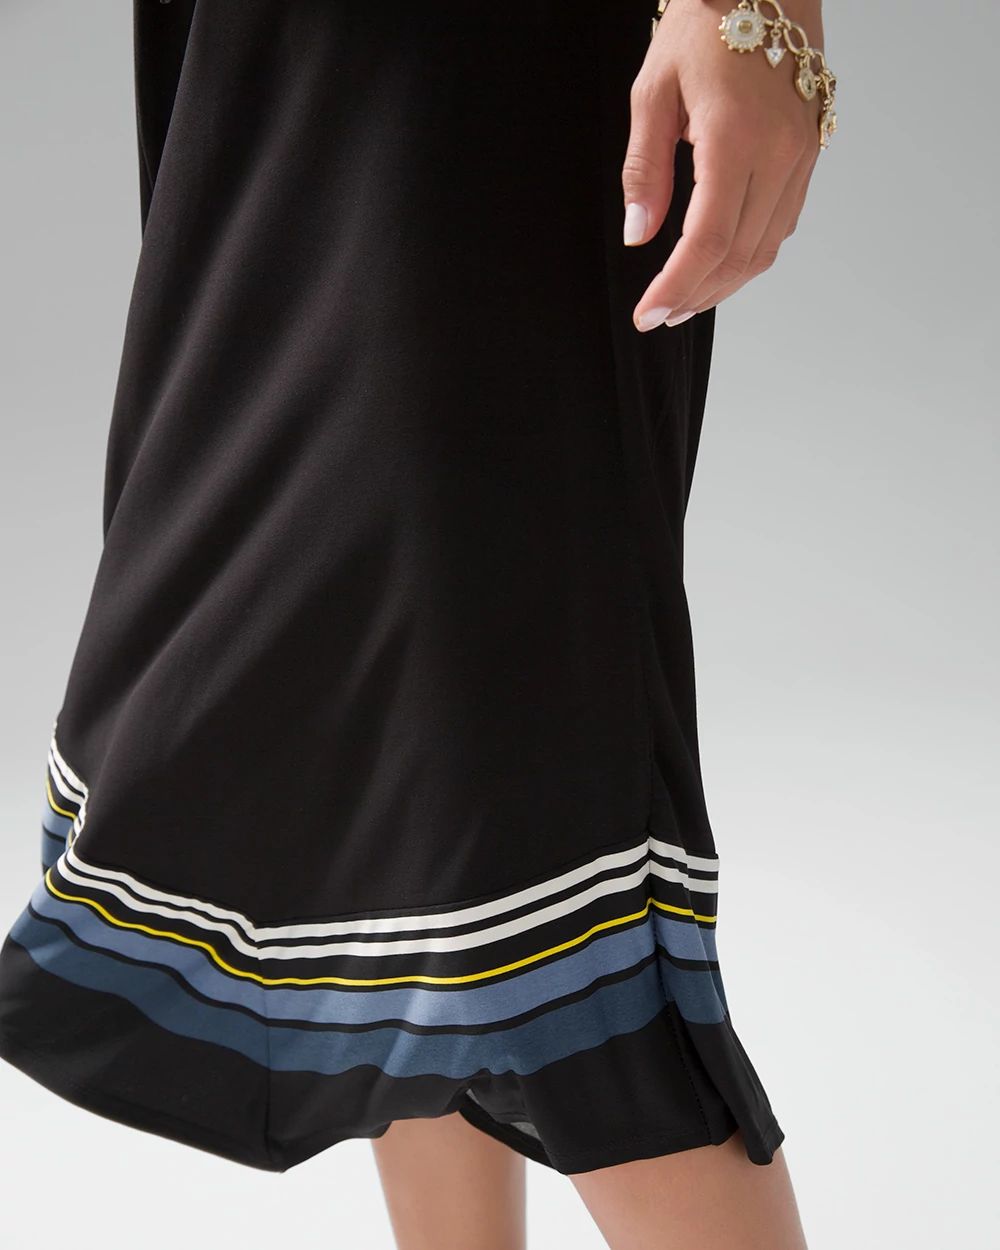 Capri Stripe Matte Jersey Midi Dress click to view larger image.